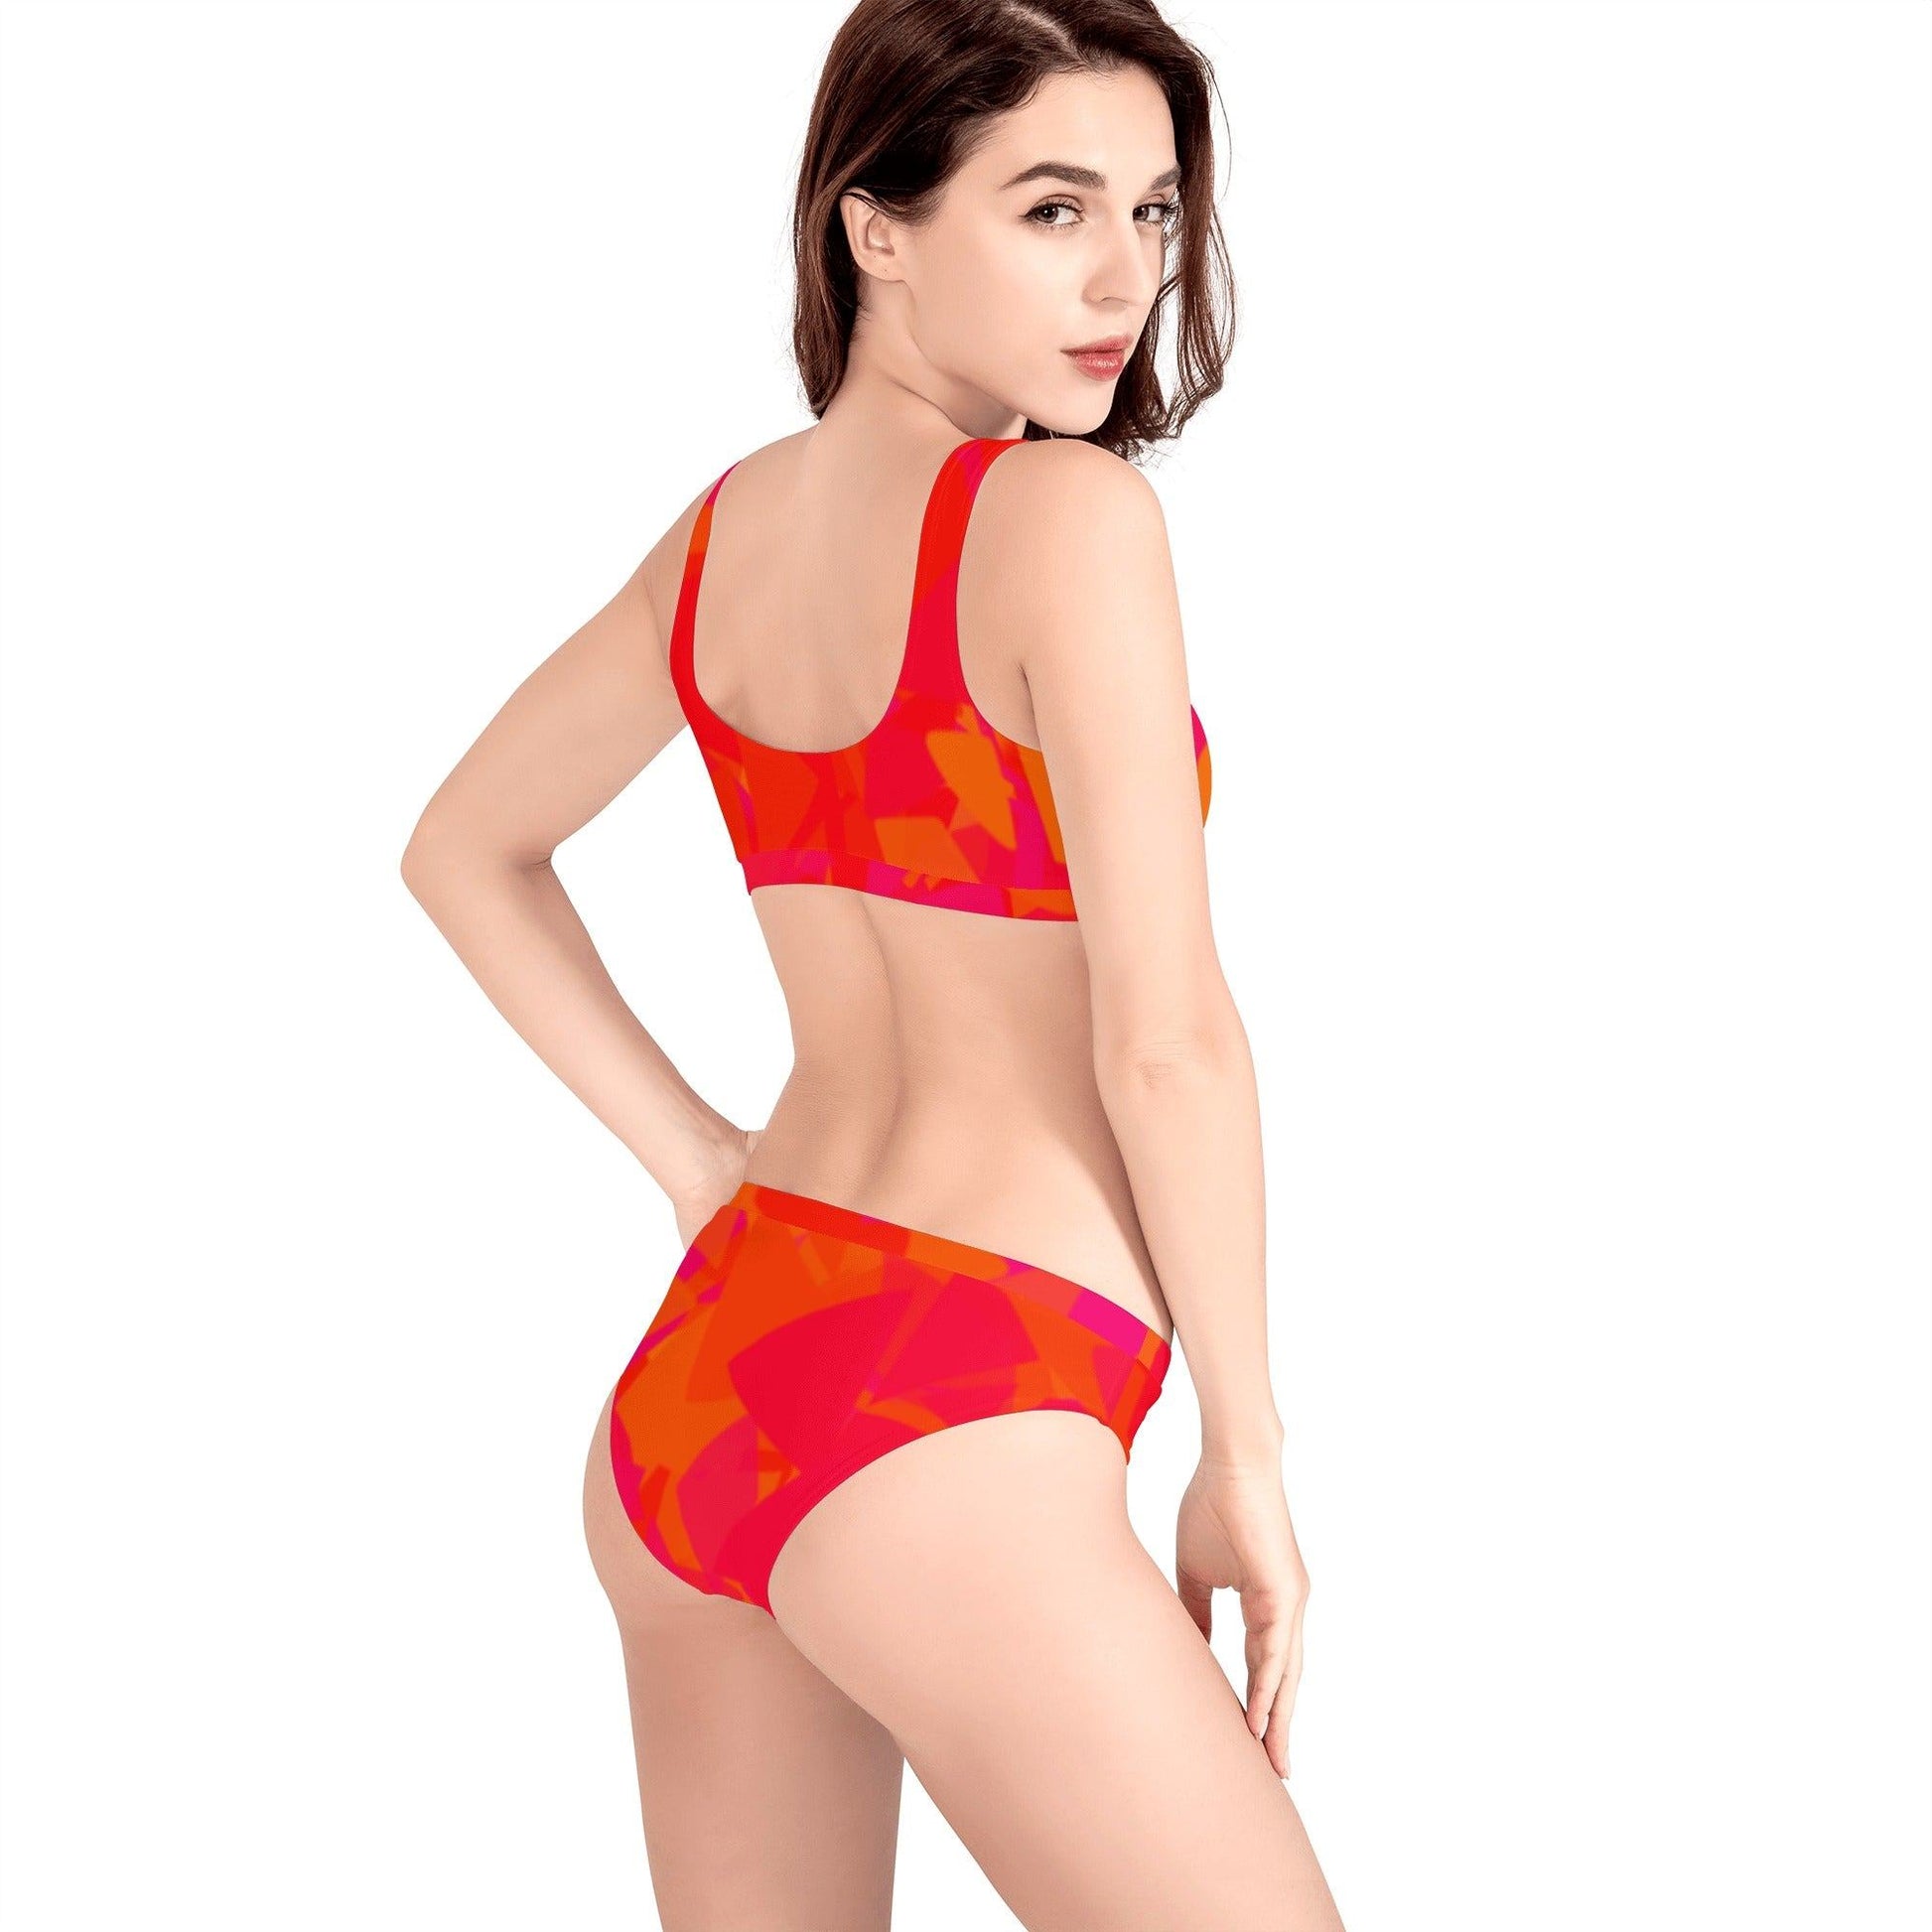 Red Crystal Sport Bikini Sport Bikini 54.99 Bikini, Crystal, Sport JLR Design